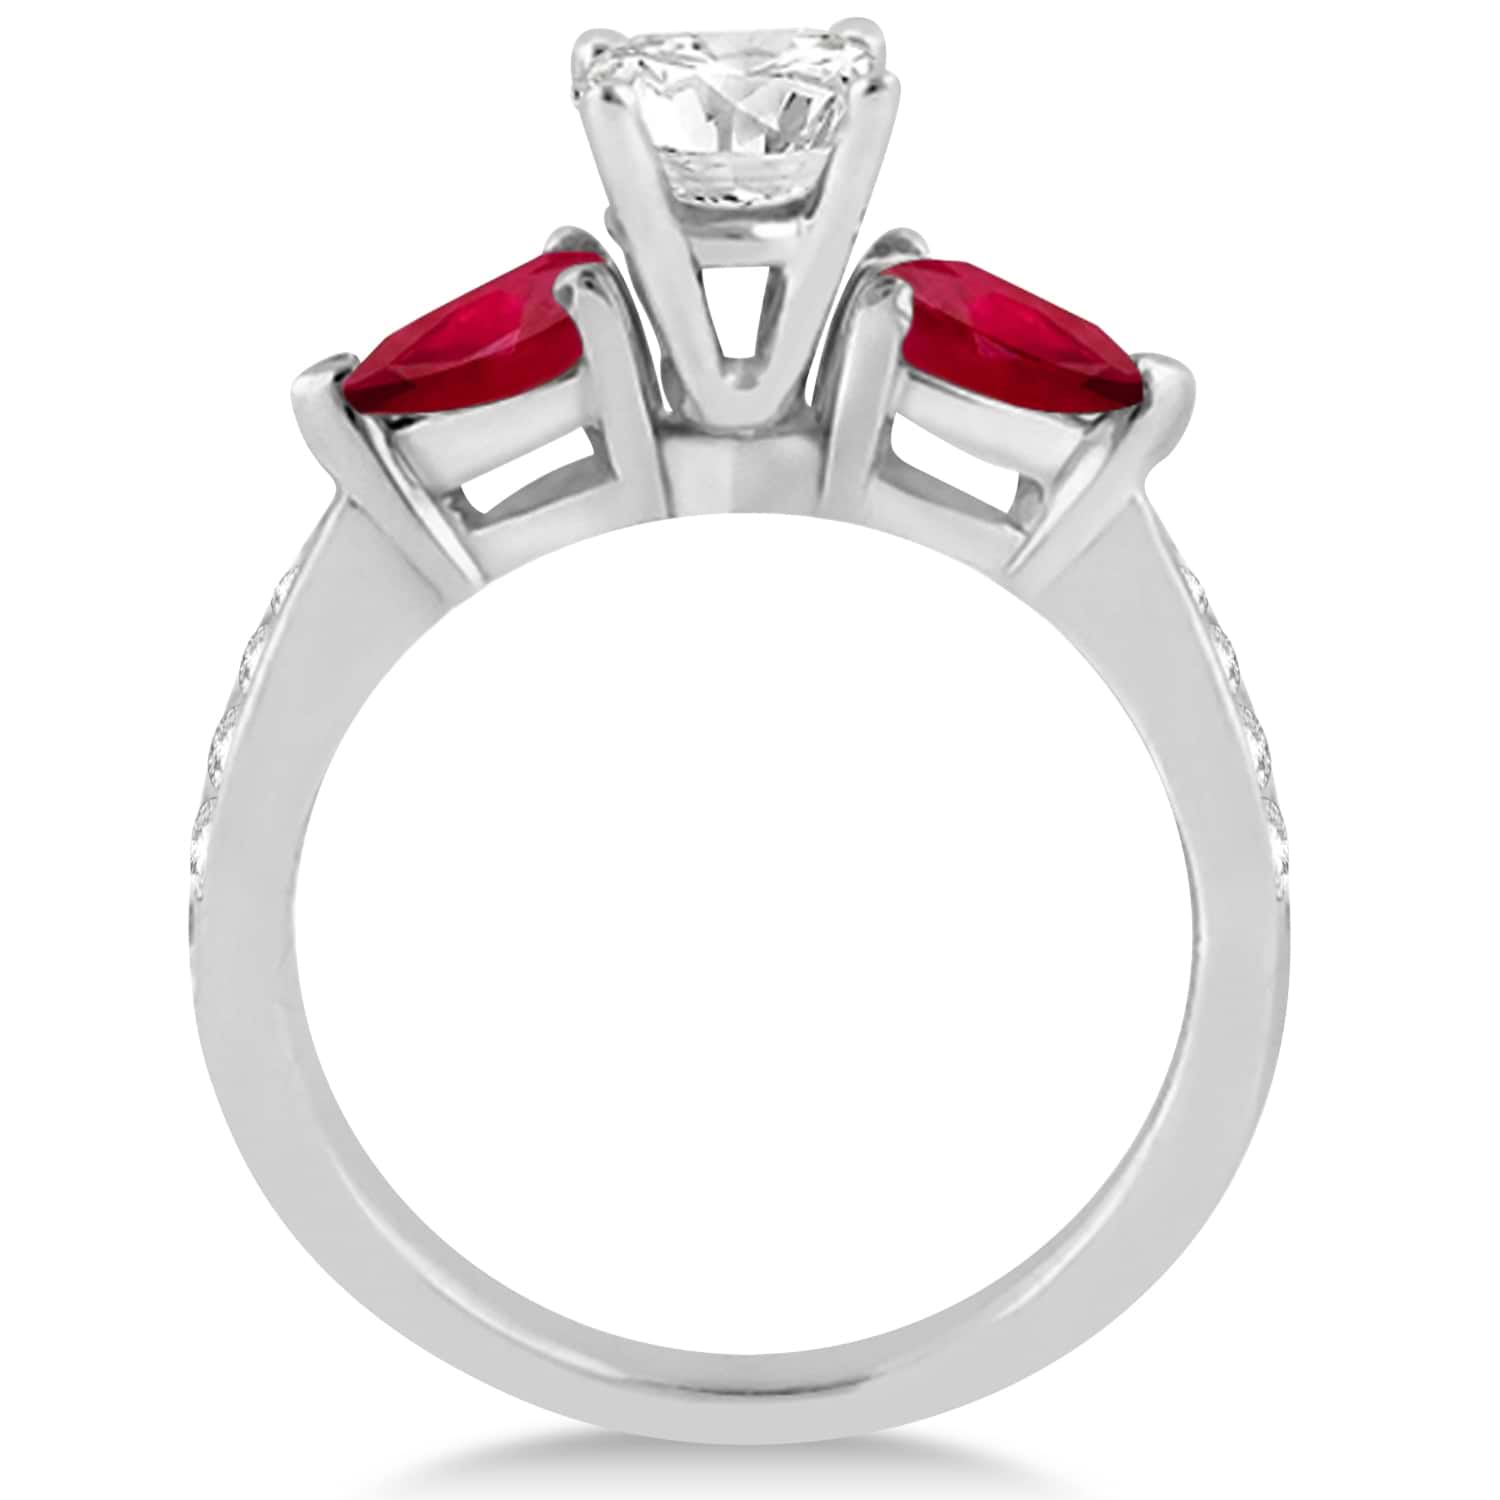 Round Diamond & Pear Ruby Gemstone Engagement Ring 18k White Gold (1.29ct)